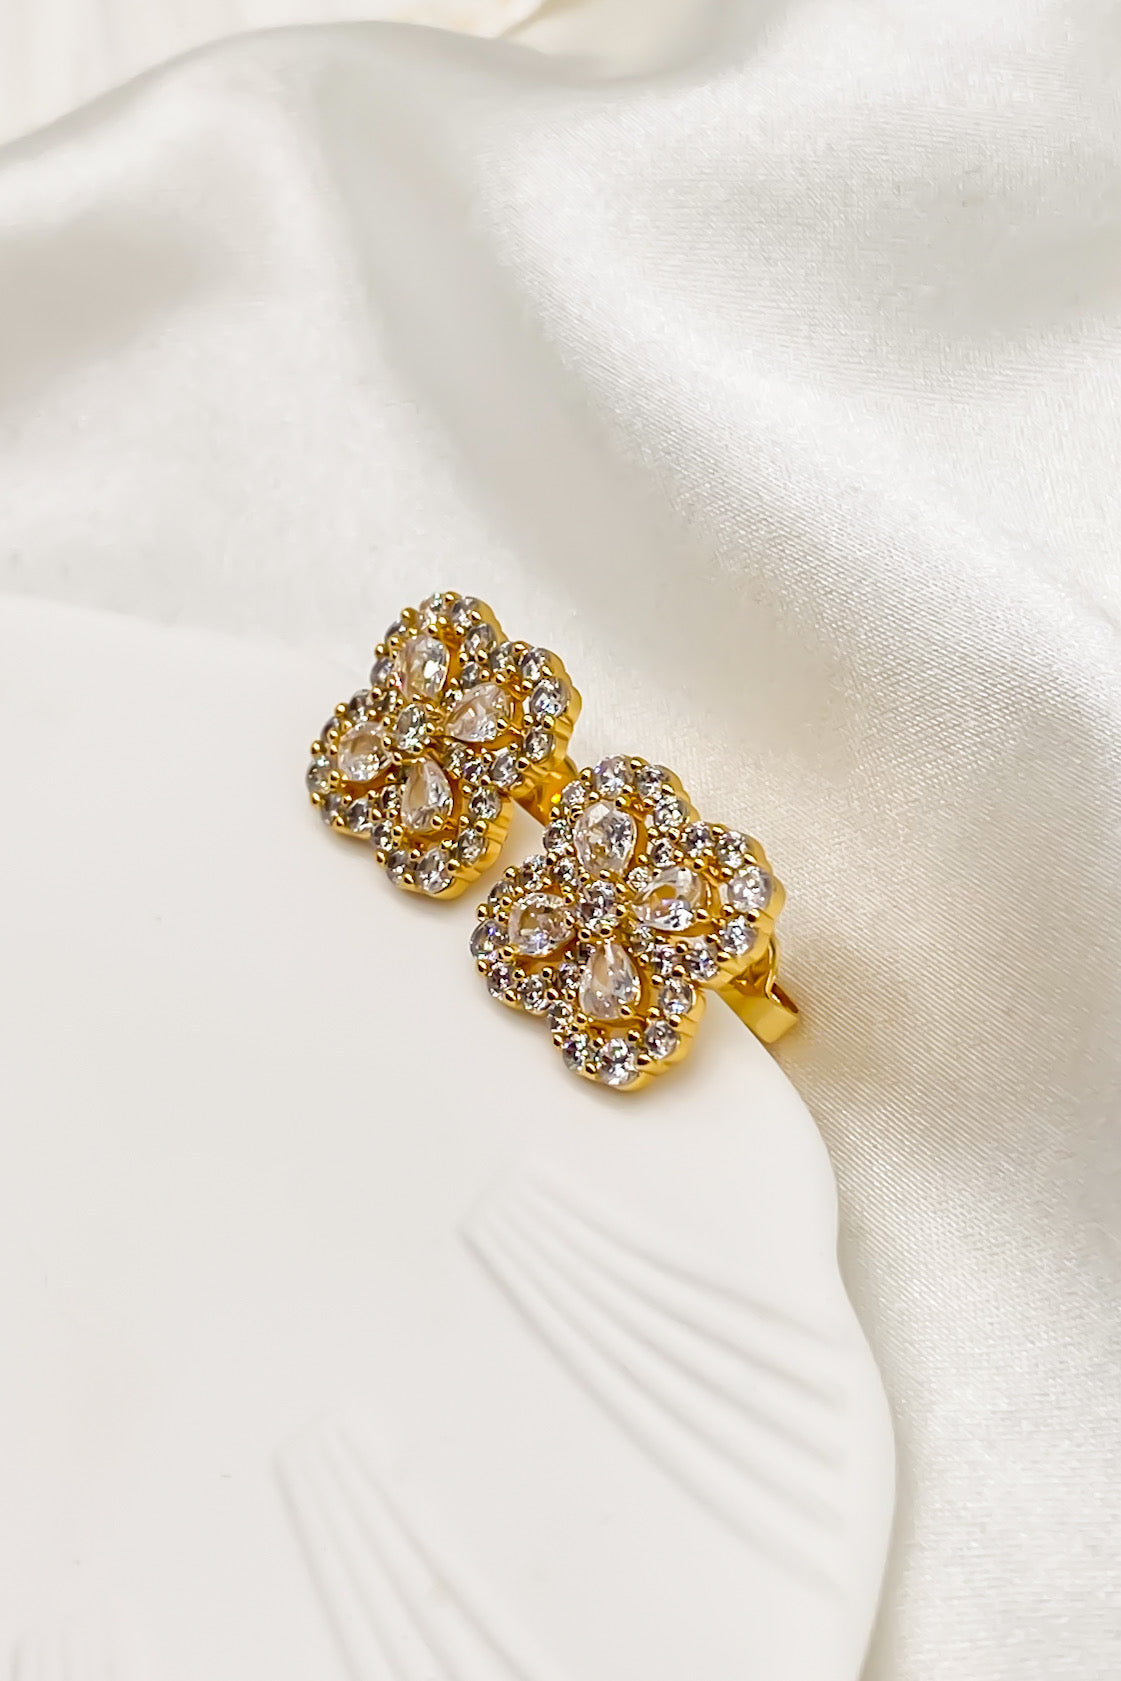 SKYE Shop Chic Modern Elegant Classy Women Jewelry French Parisian Minimalist Tilly Crystal Clover Earrings 9